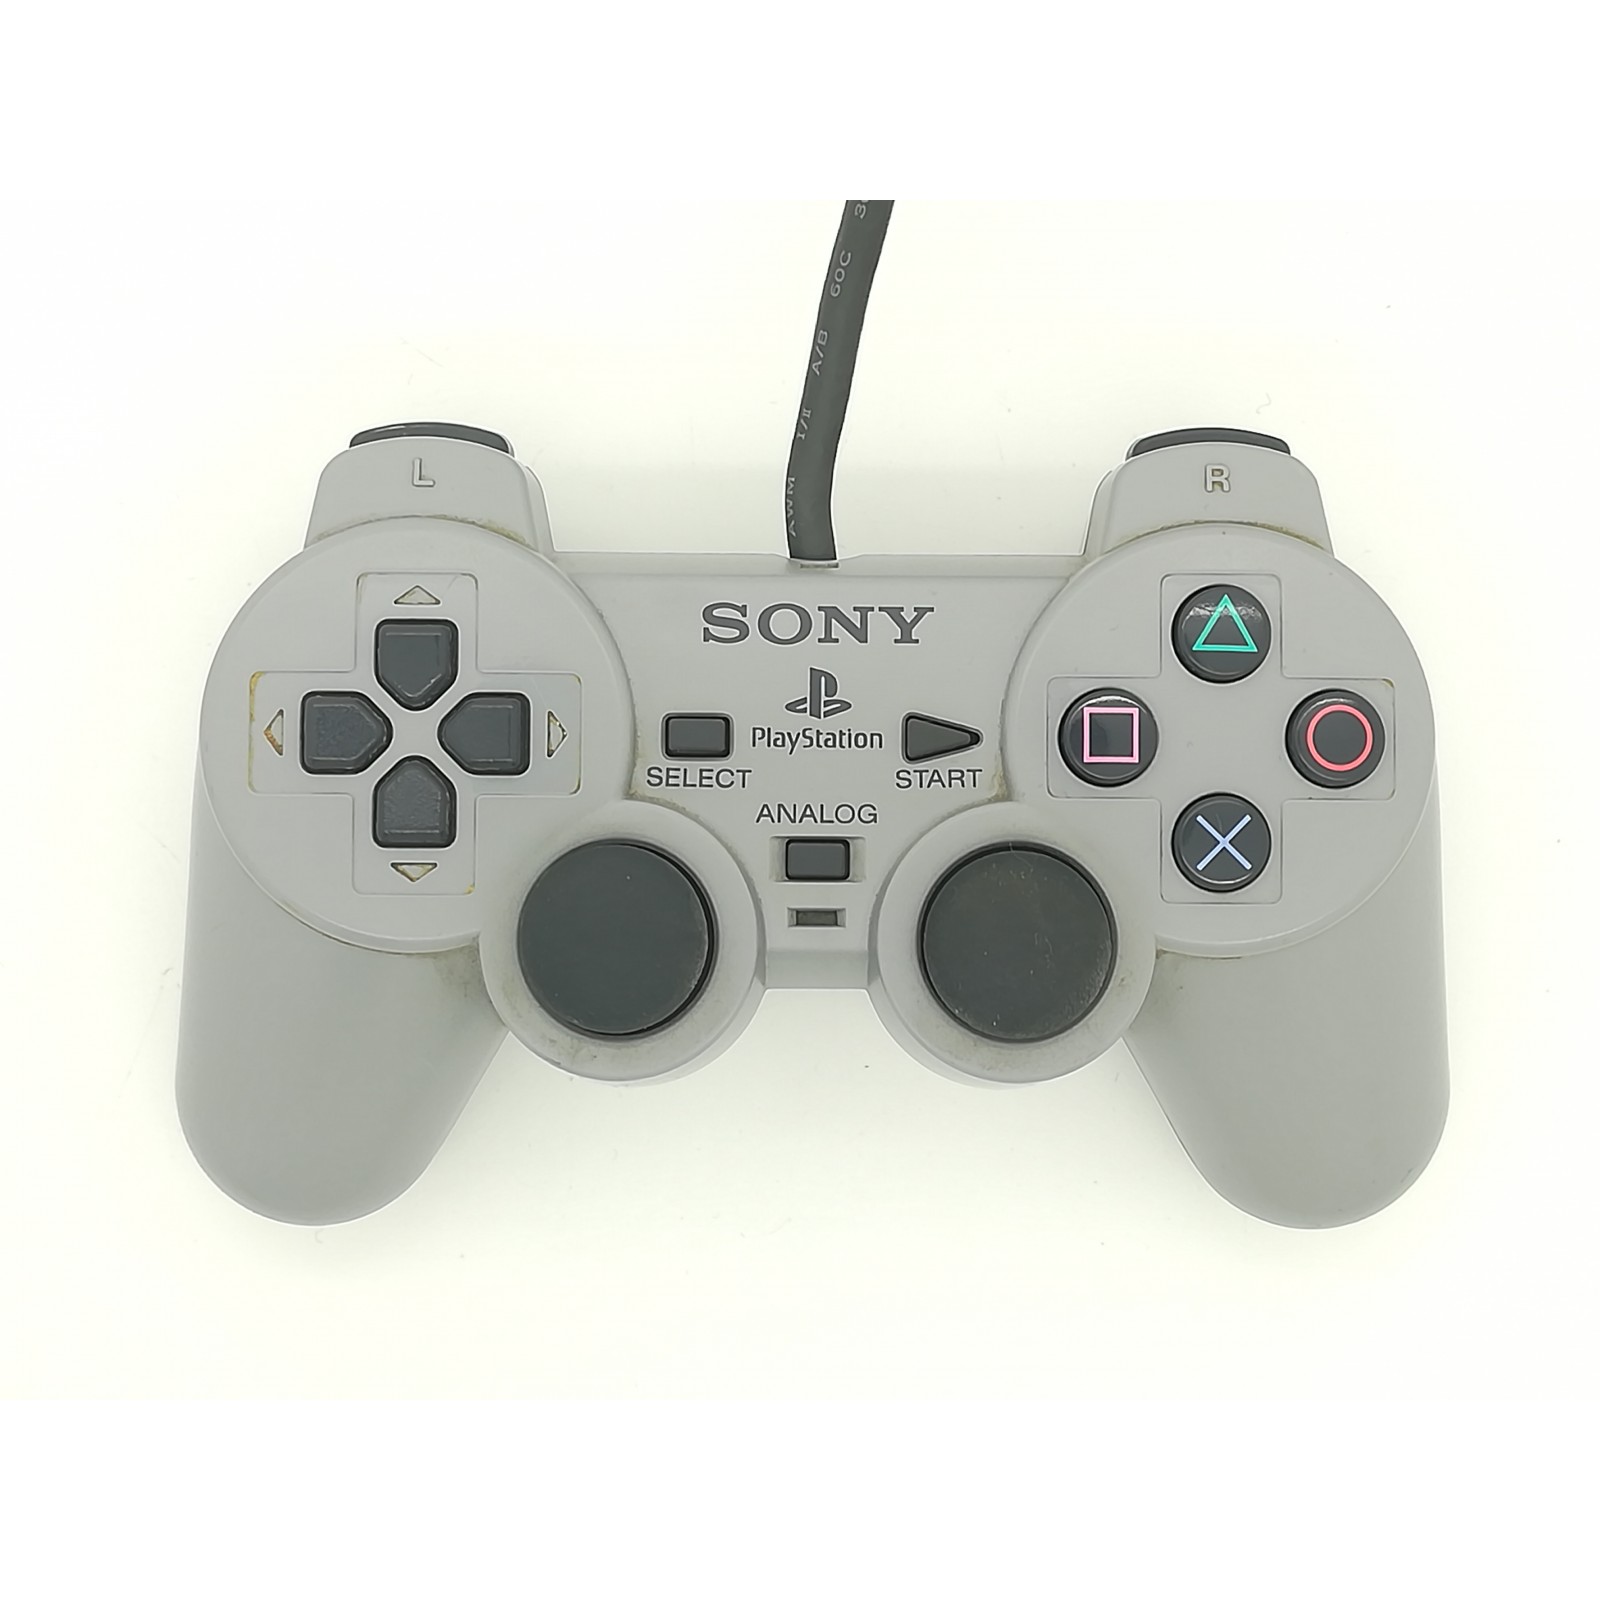 PlayStation: La historia 'secreta' del mando análogo de PS1